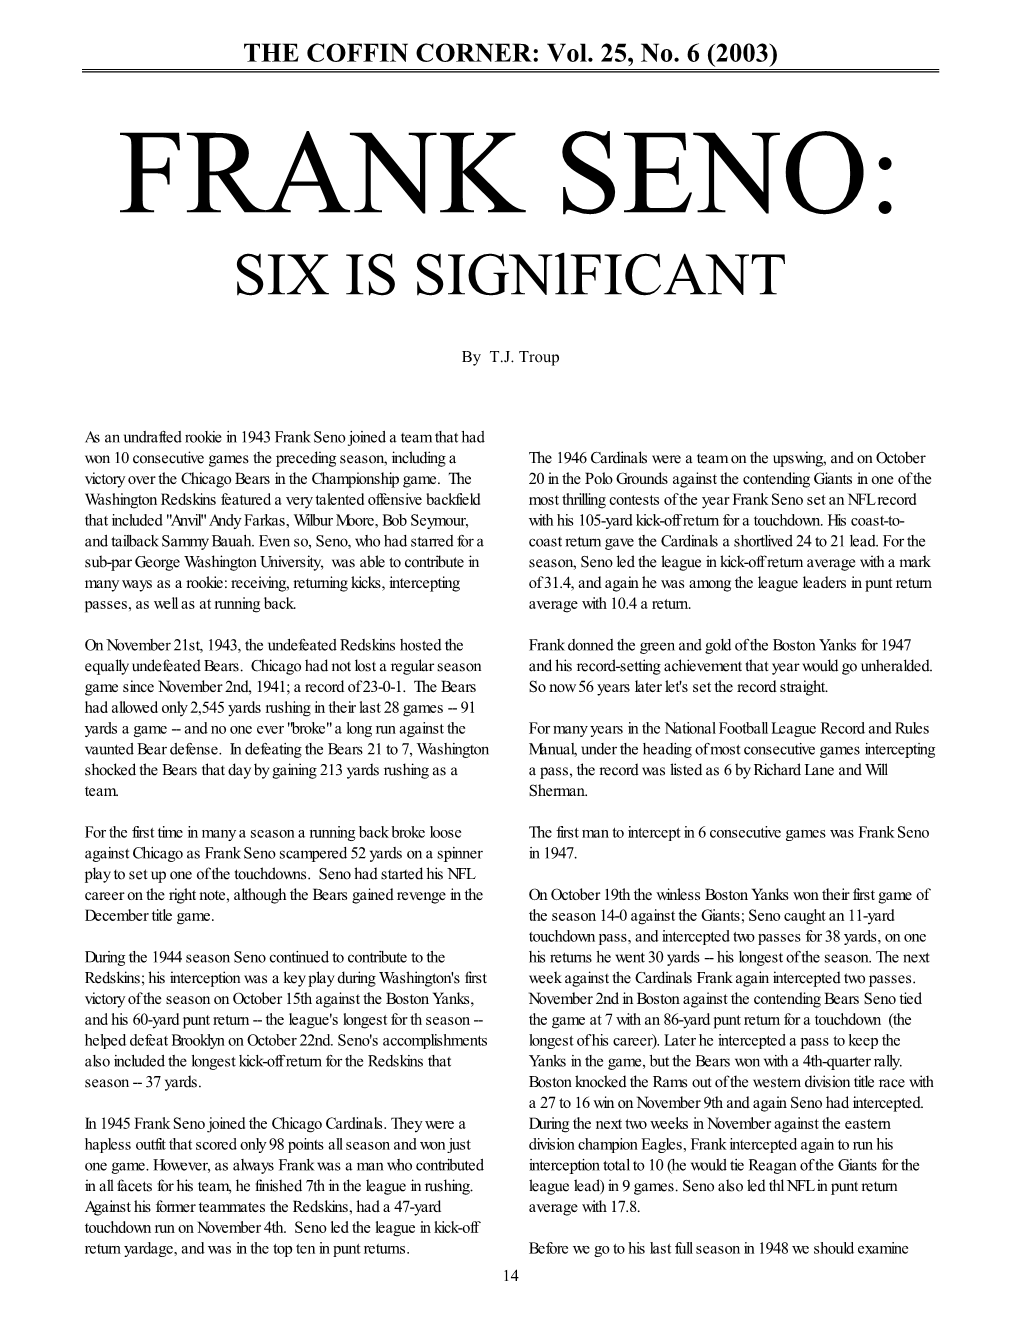 FRANK SENO: SIX IS Signlficant